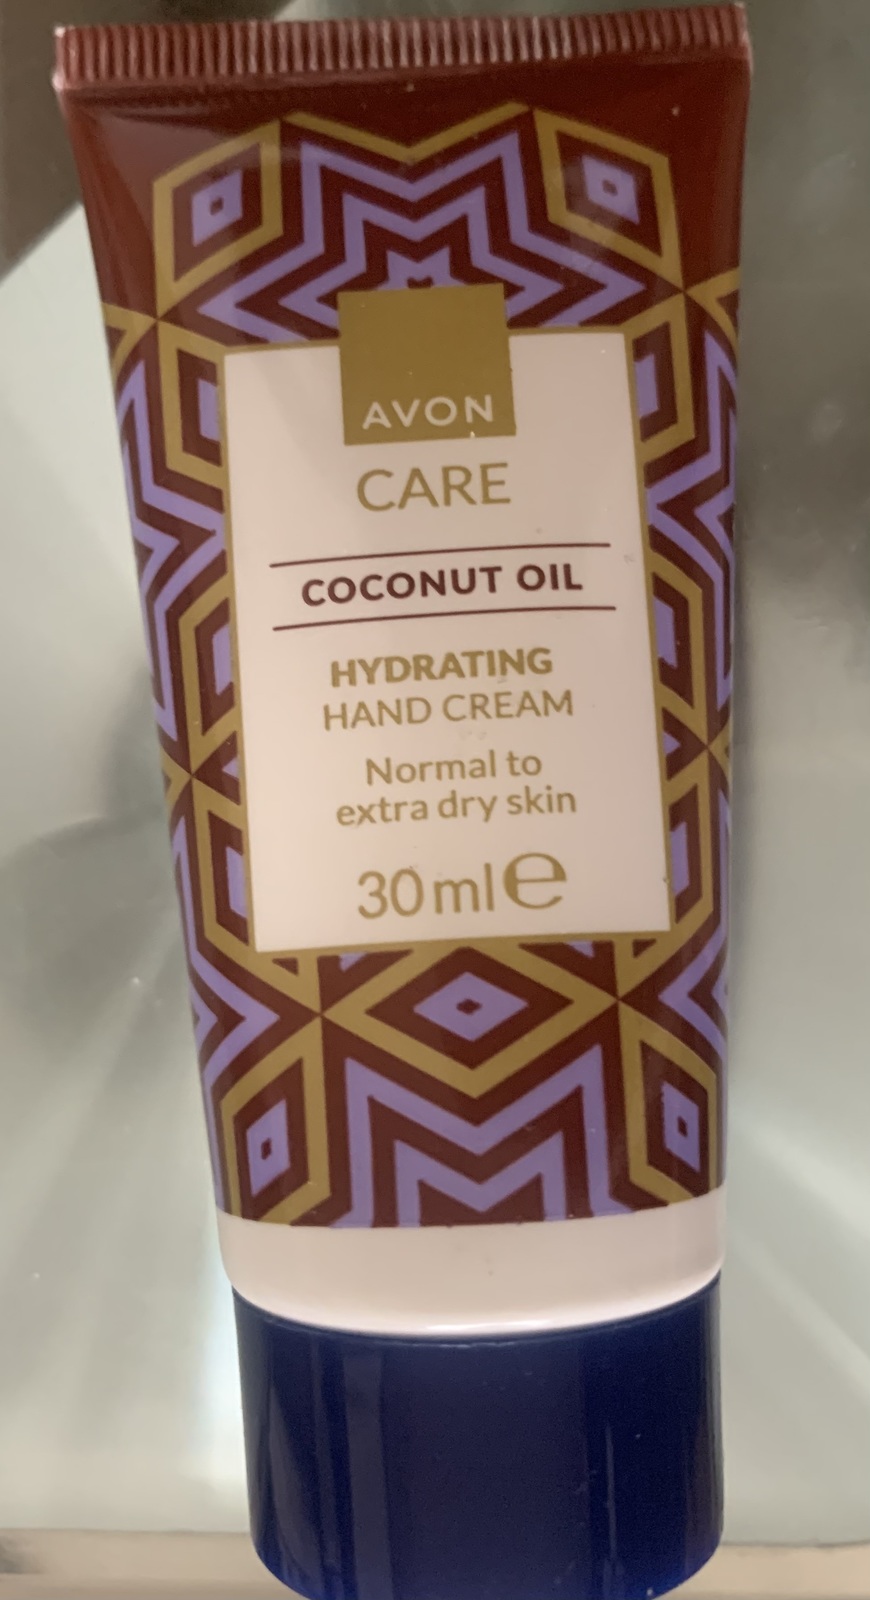 Avon Care Coconut Oil Hand Cream 30ML - $3.50